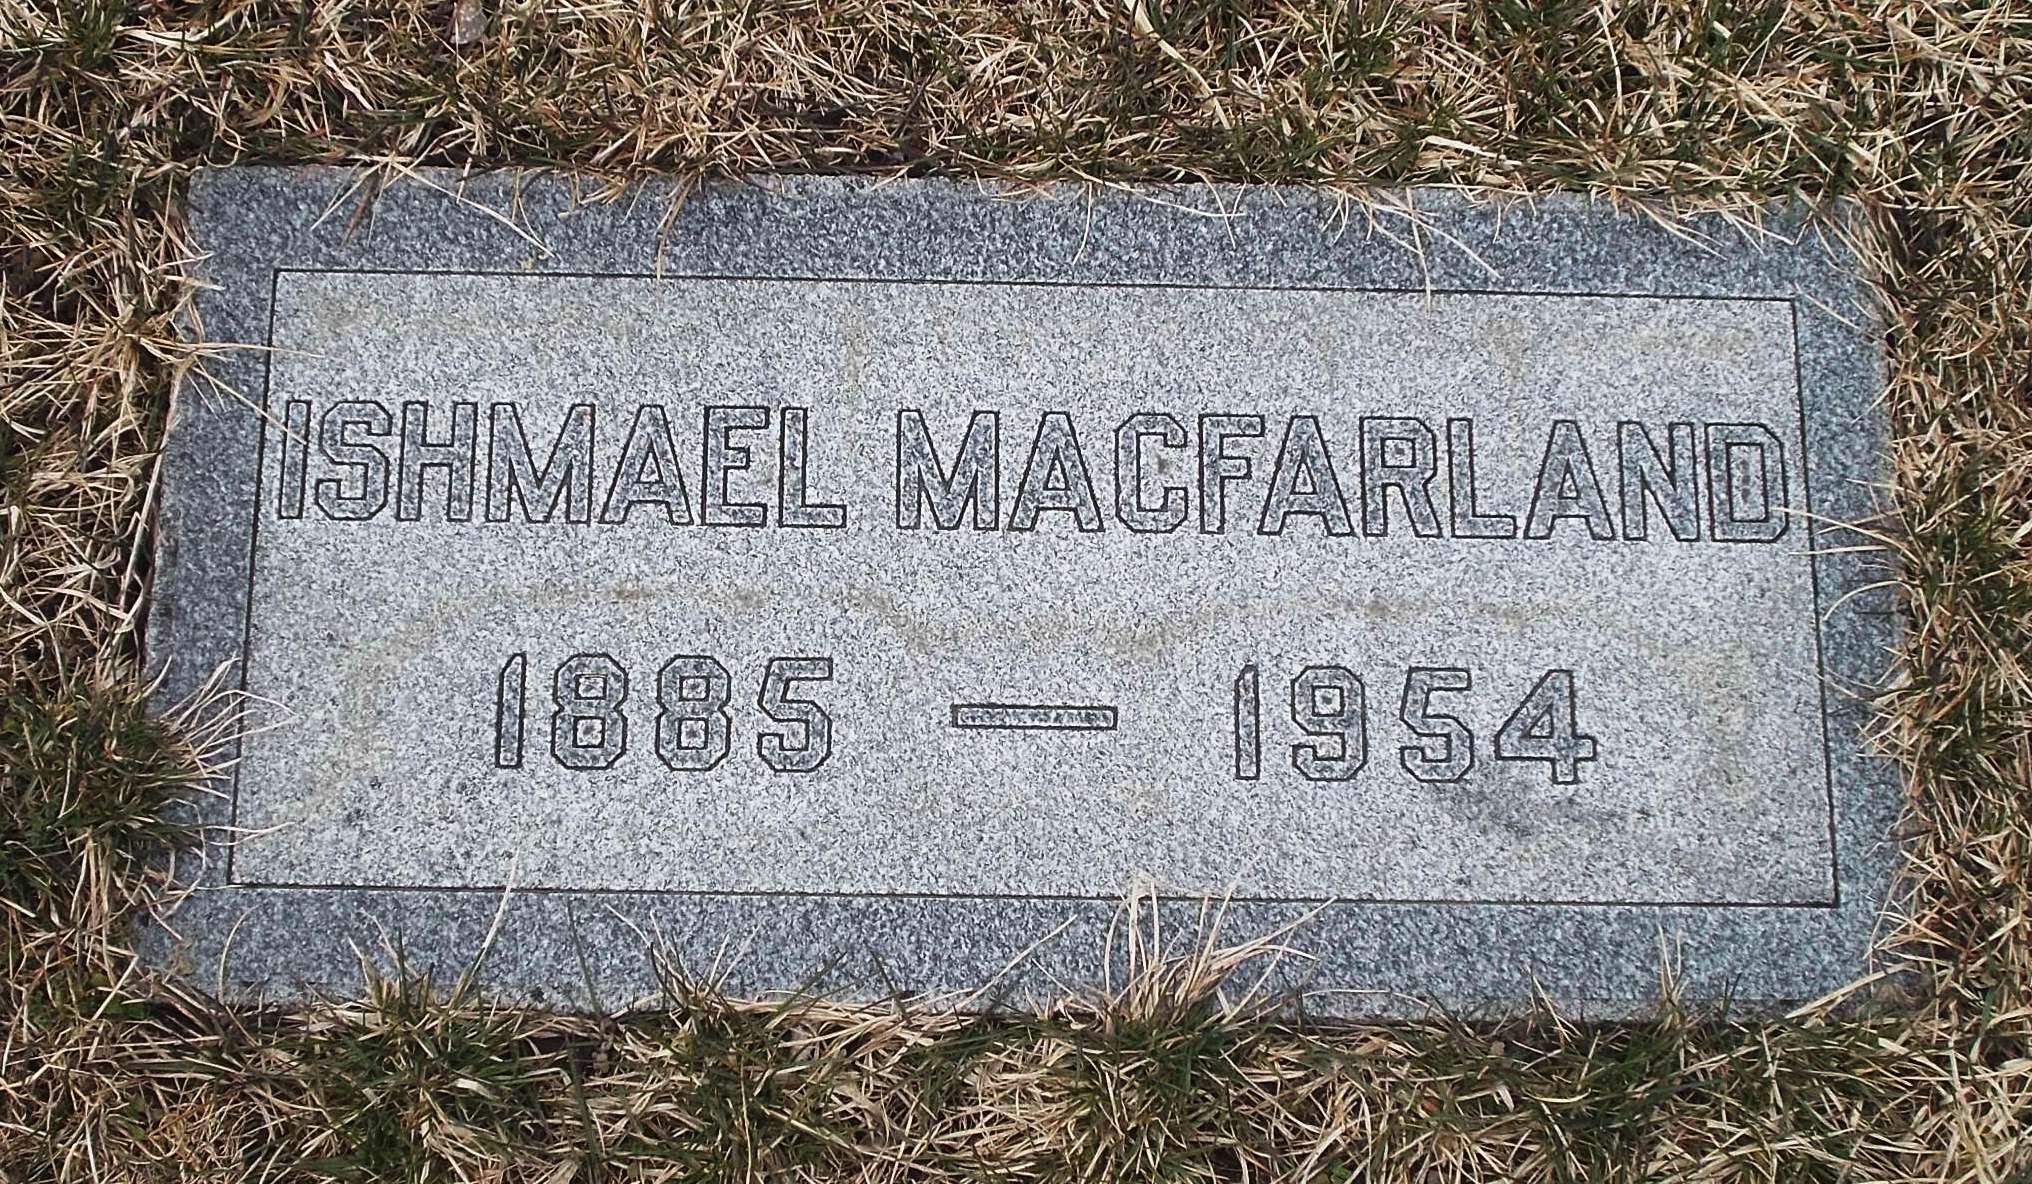 Ishmael MacFarland